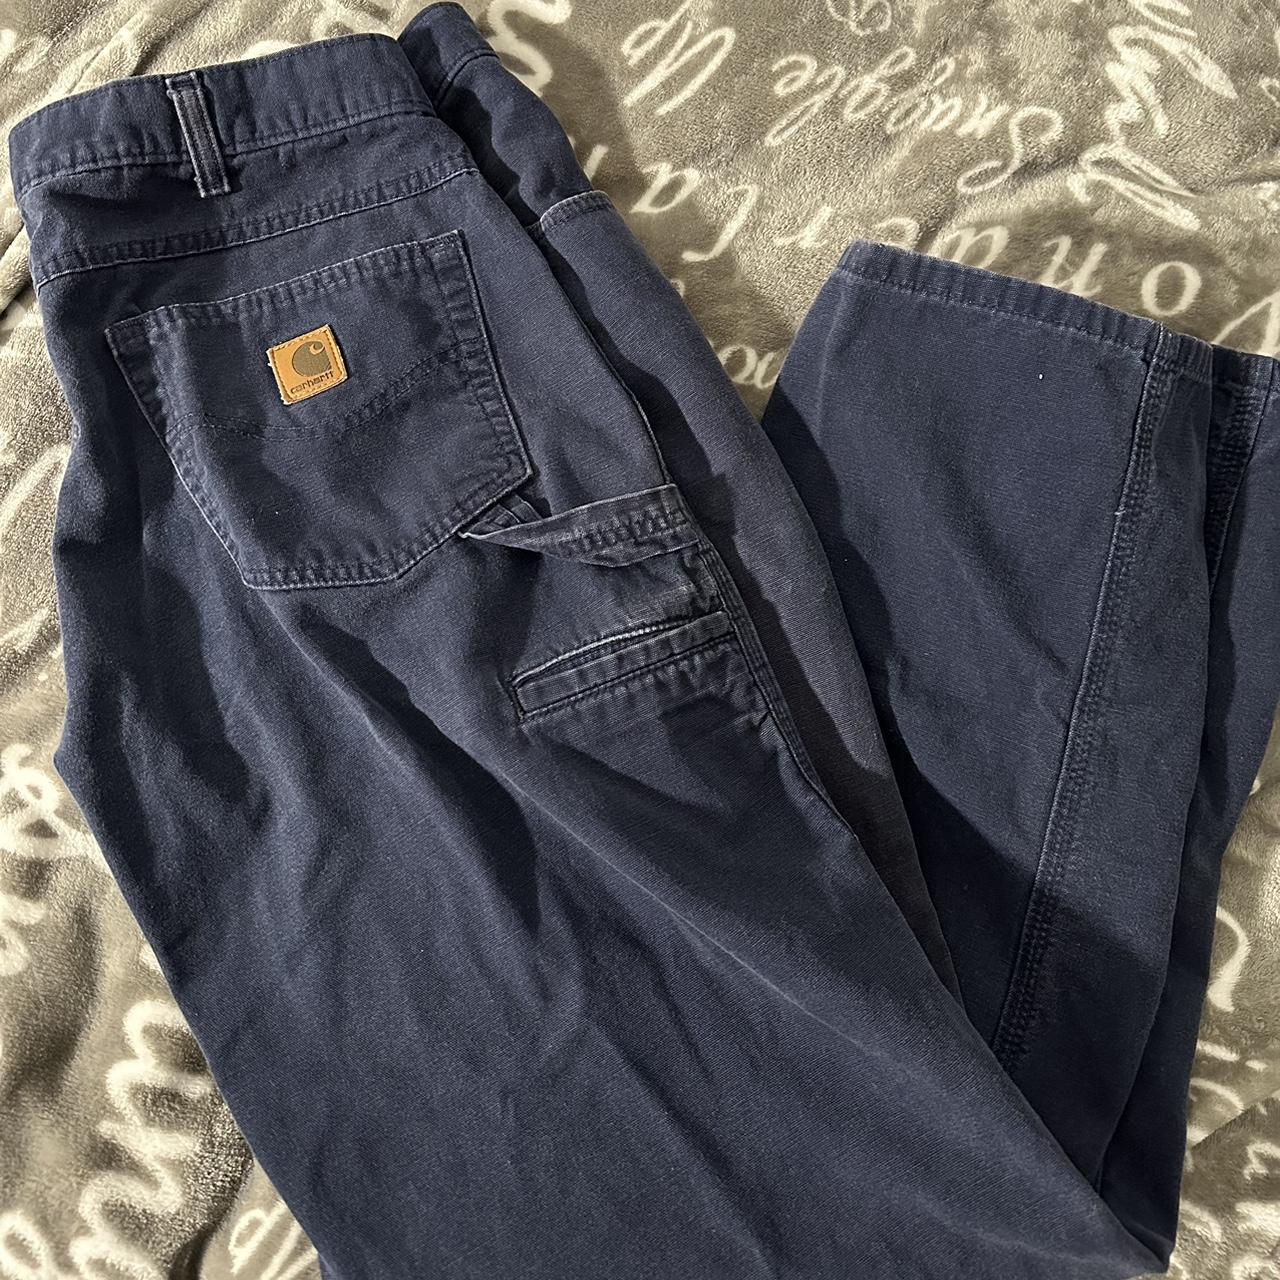 Vintage carhartt jeans Size 32x31 Very clean... - Depop